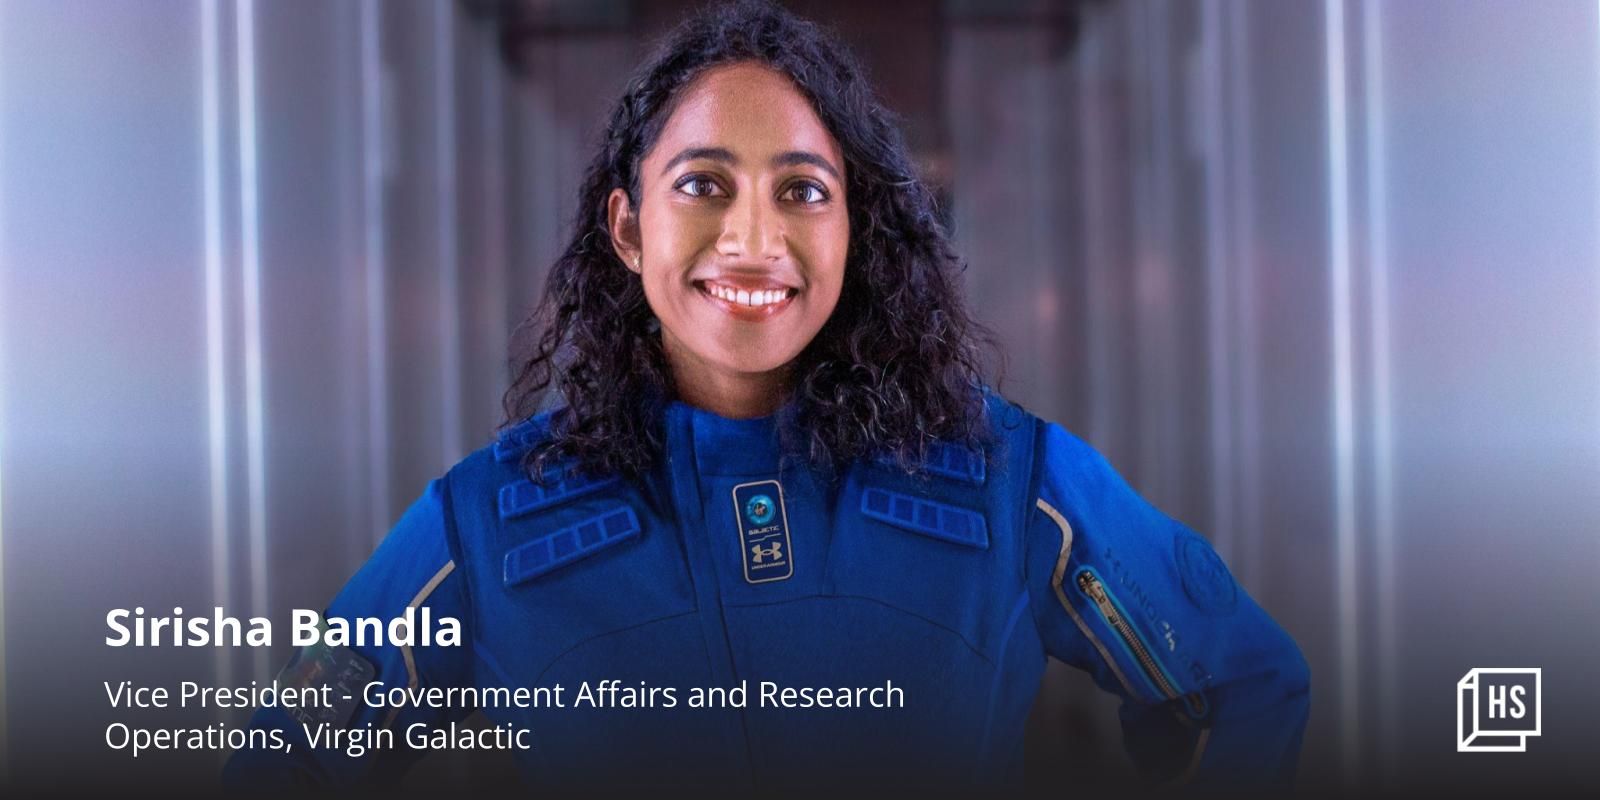 Meet Sirisha Bandla, the third woman of Indian origin to fly into space